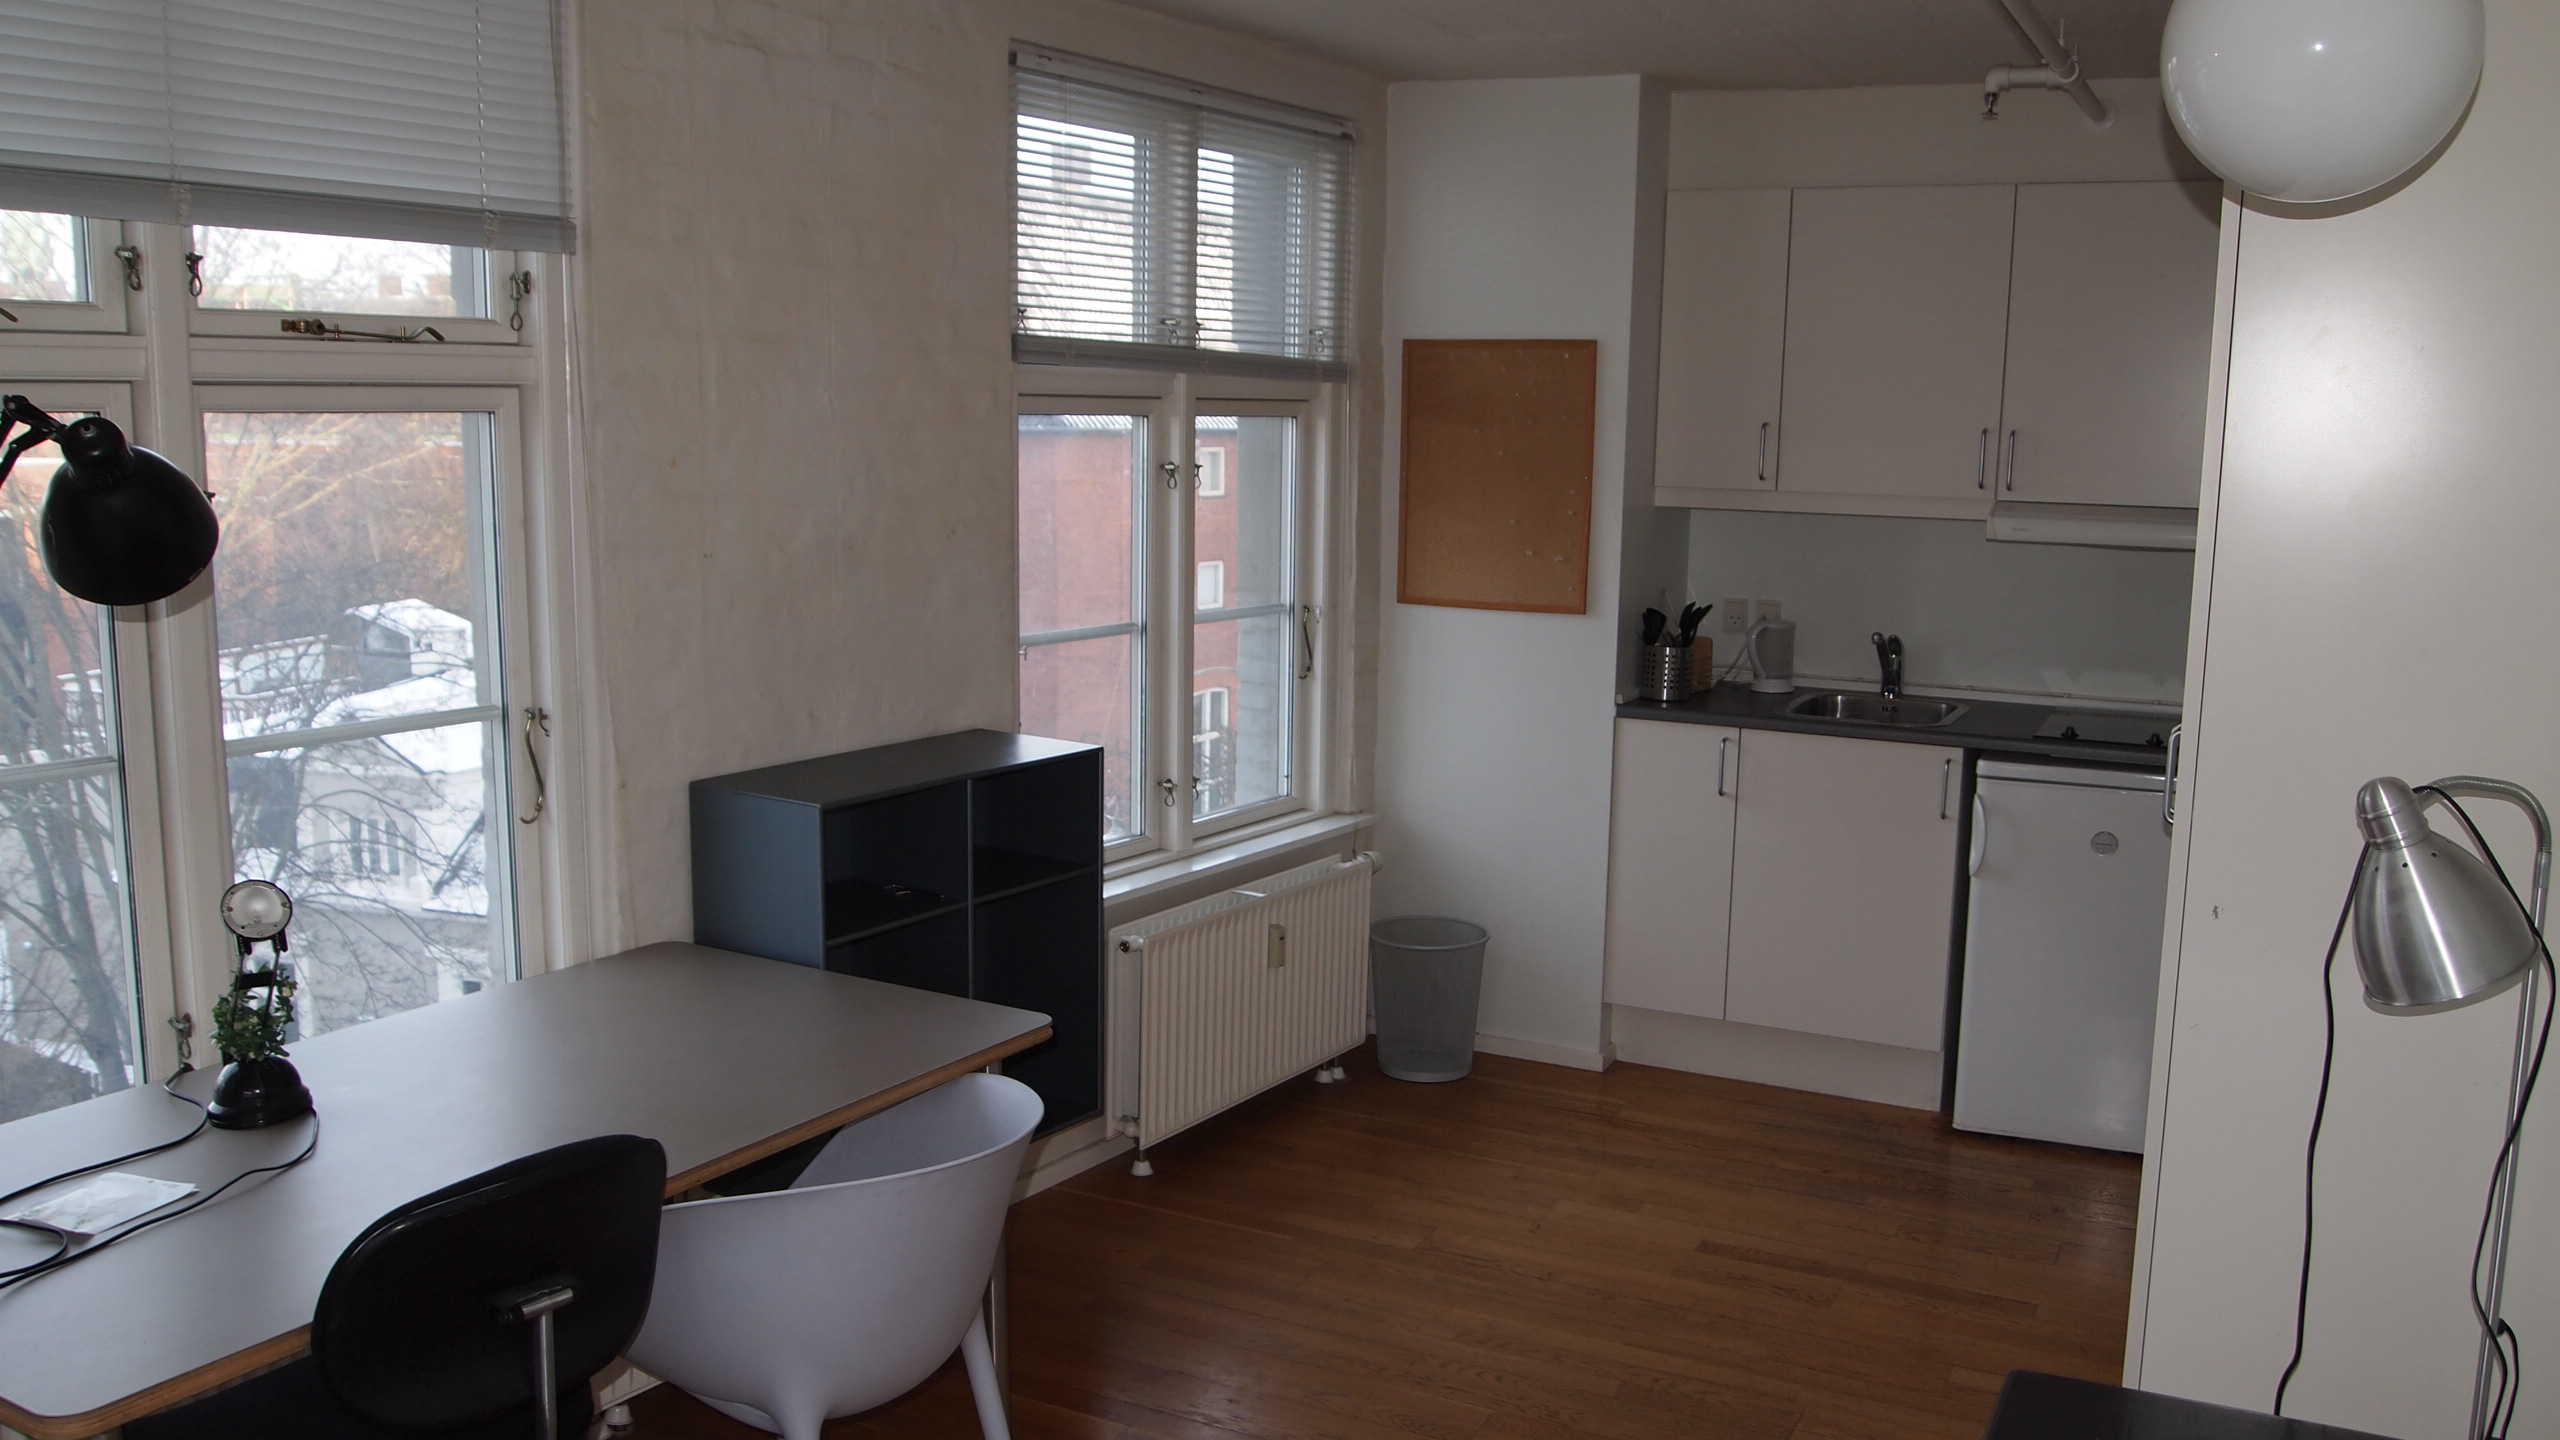 Accommodation | CBS - Copenhagen Business School2560 x 1440